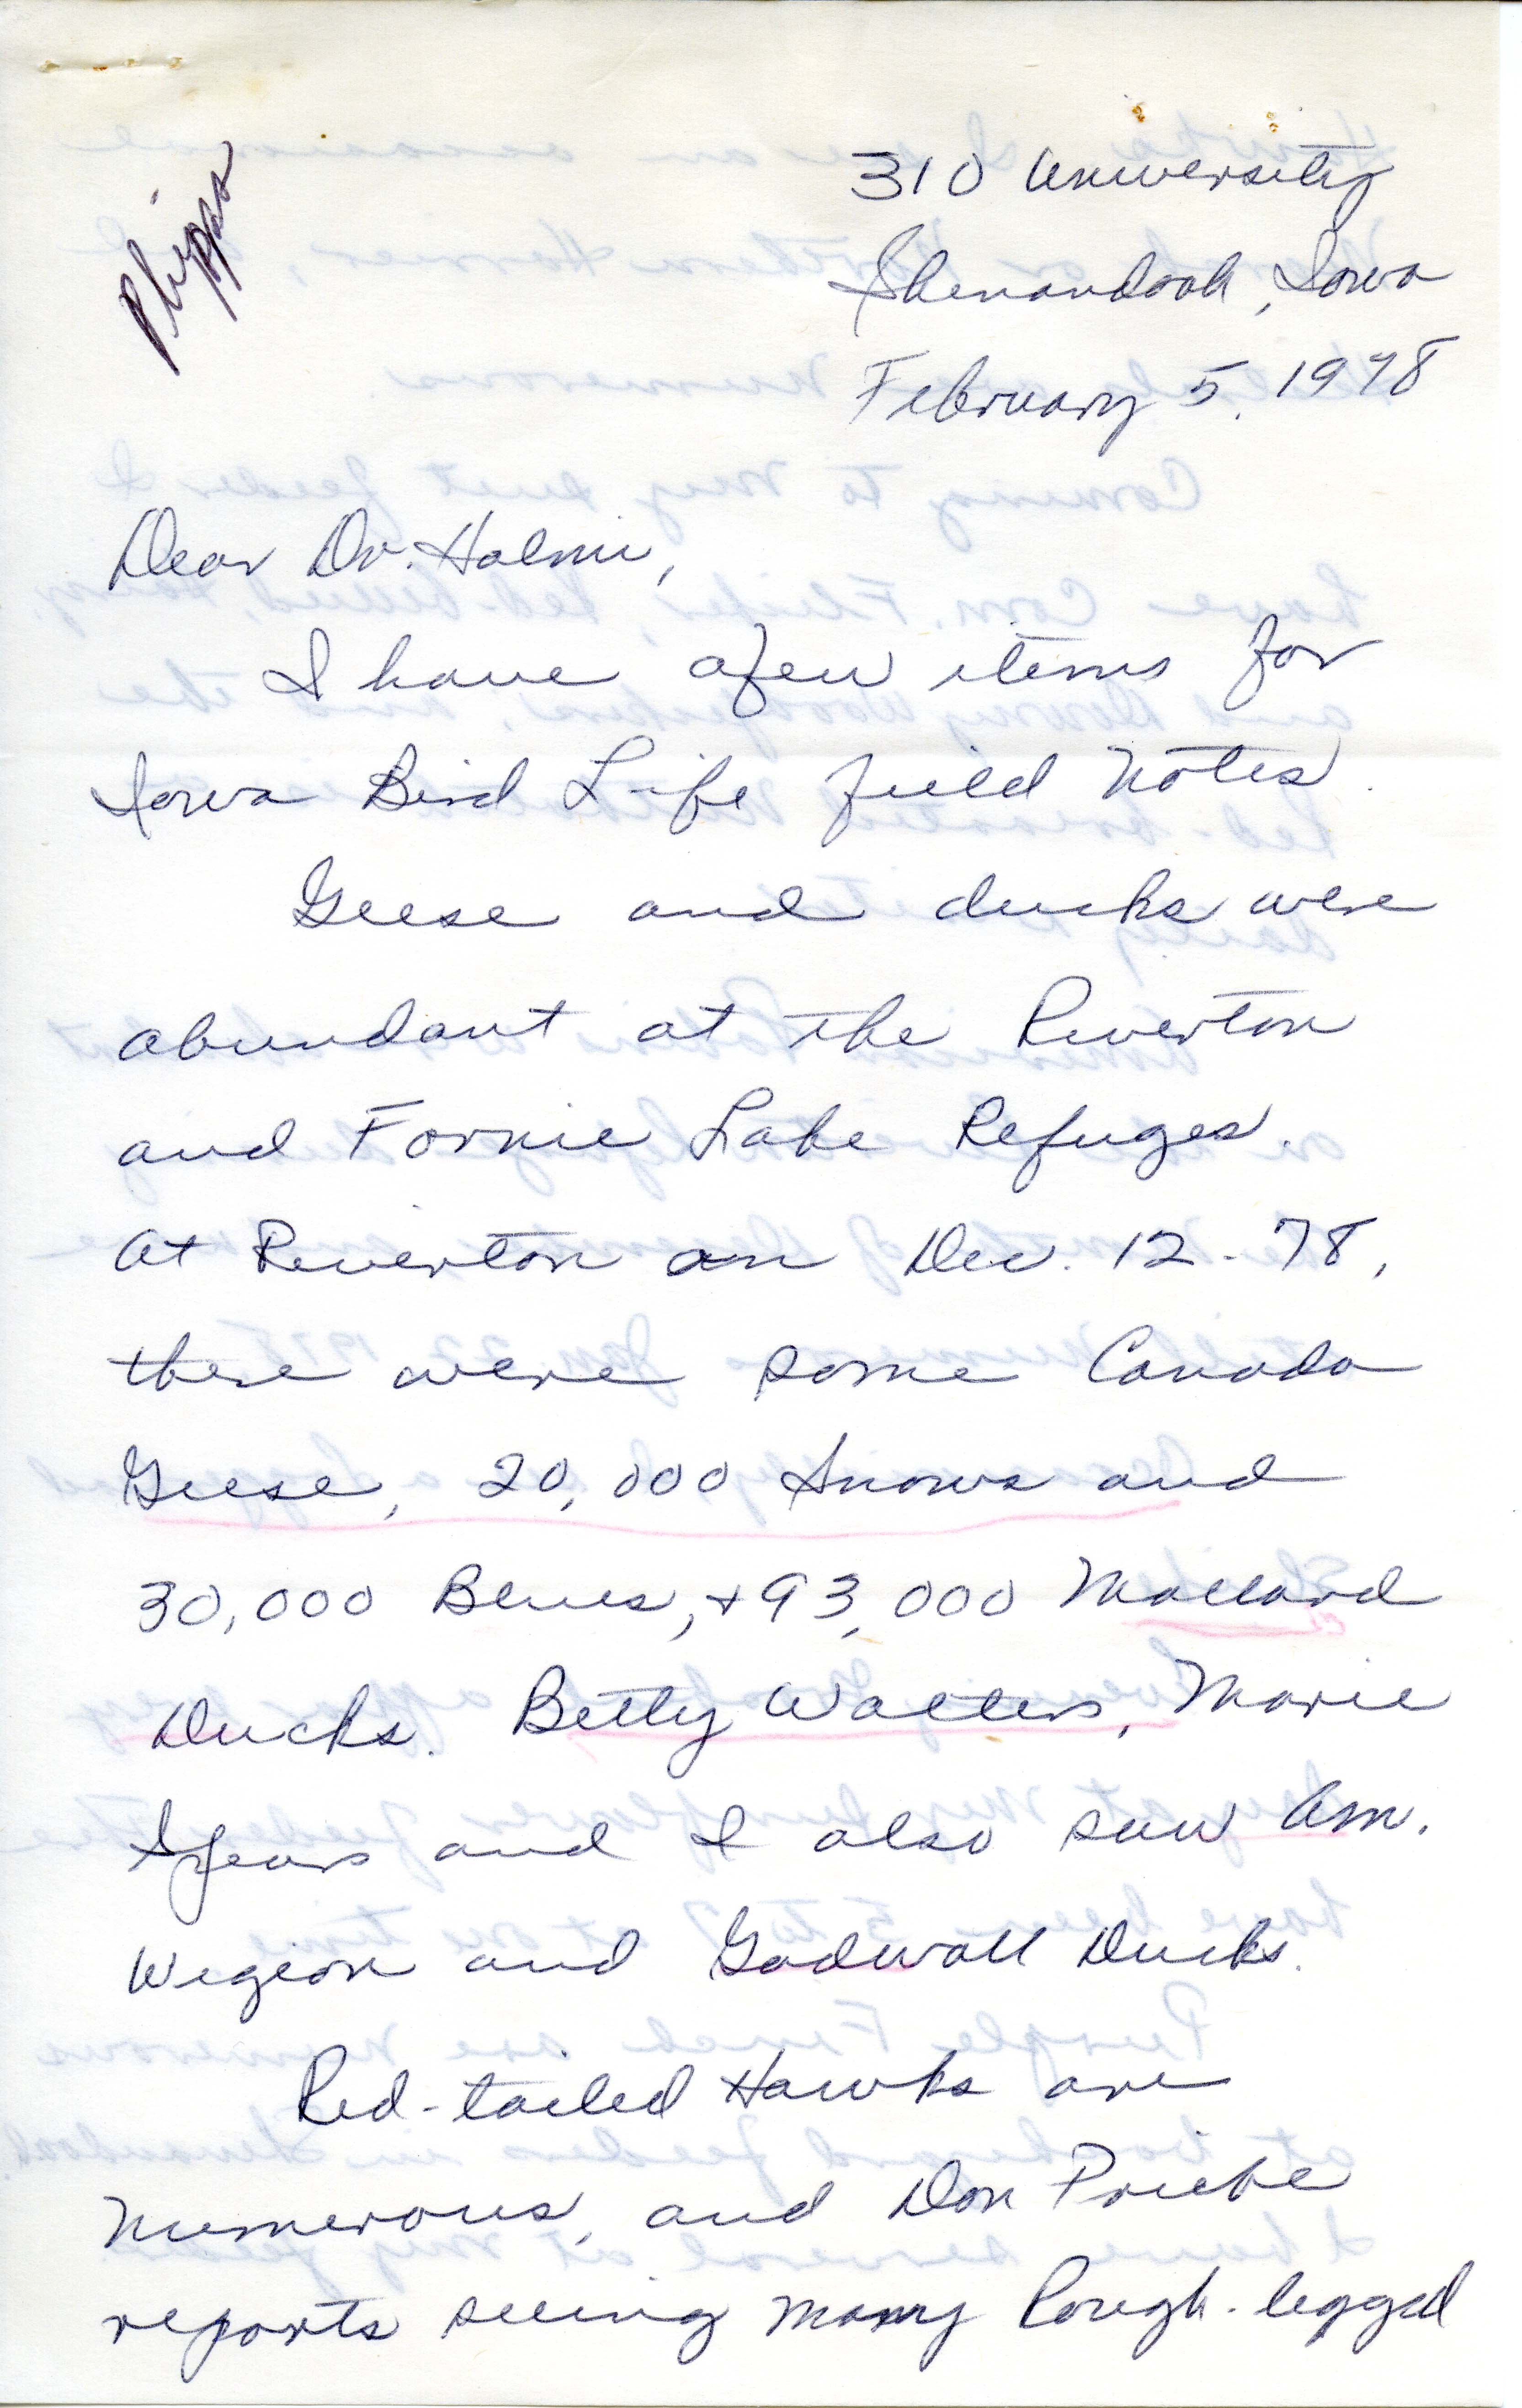 Ruth Phipps letter to Nicholas S. Halmi regarding bird watching, February 5, 1978